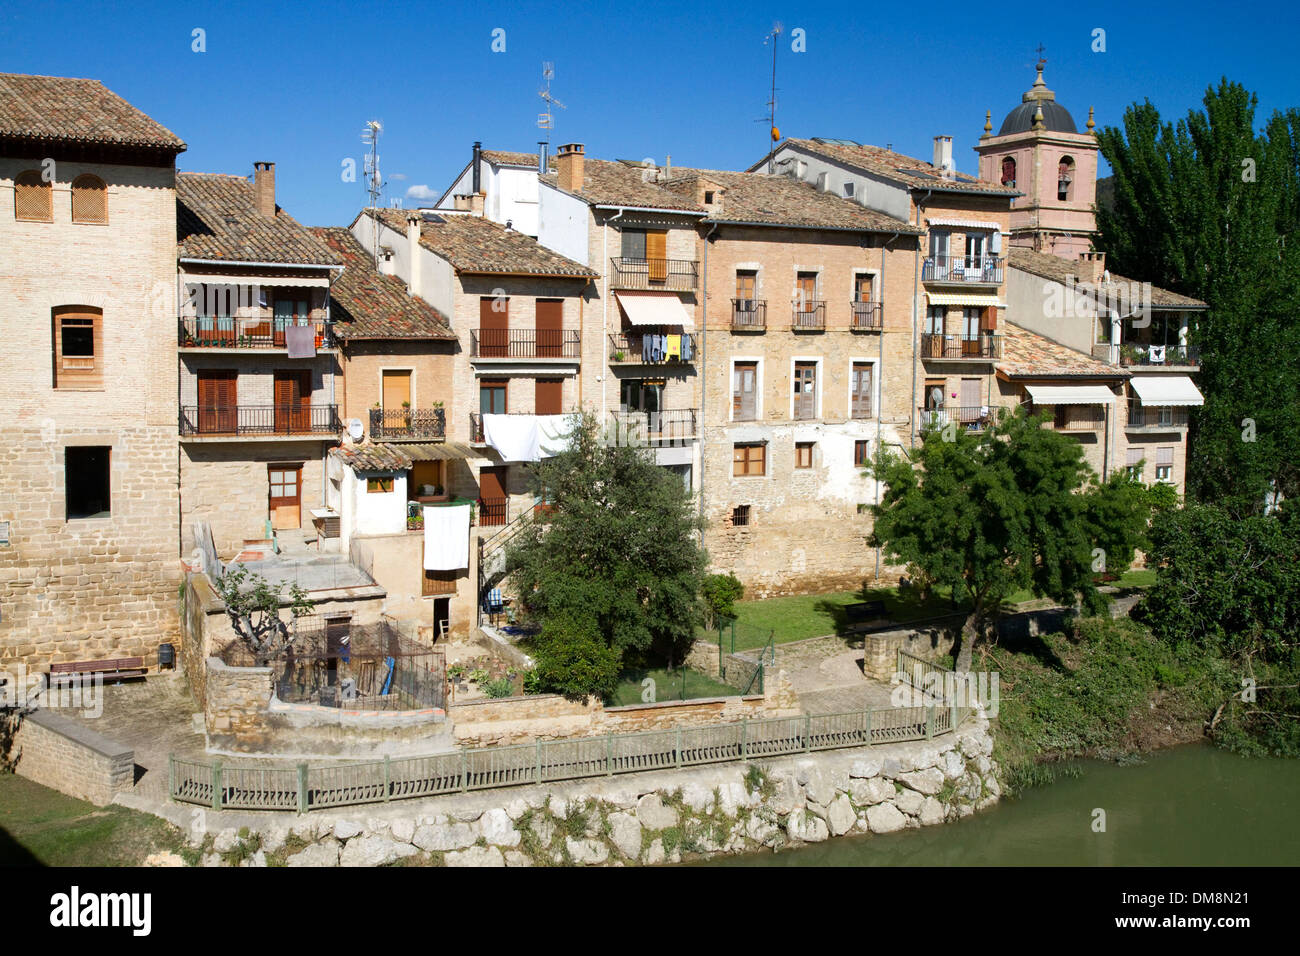 Puente La Reina is a Basque town along the Way of St. James pilgrimage route, Navarra, Spain. Stock Photo